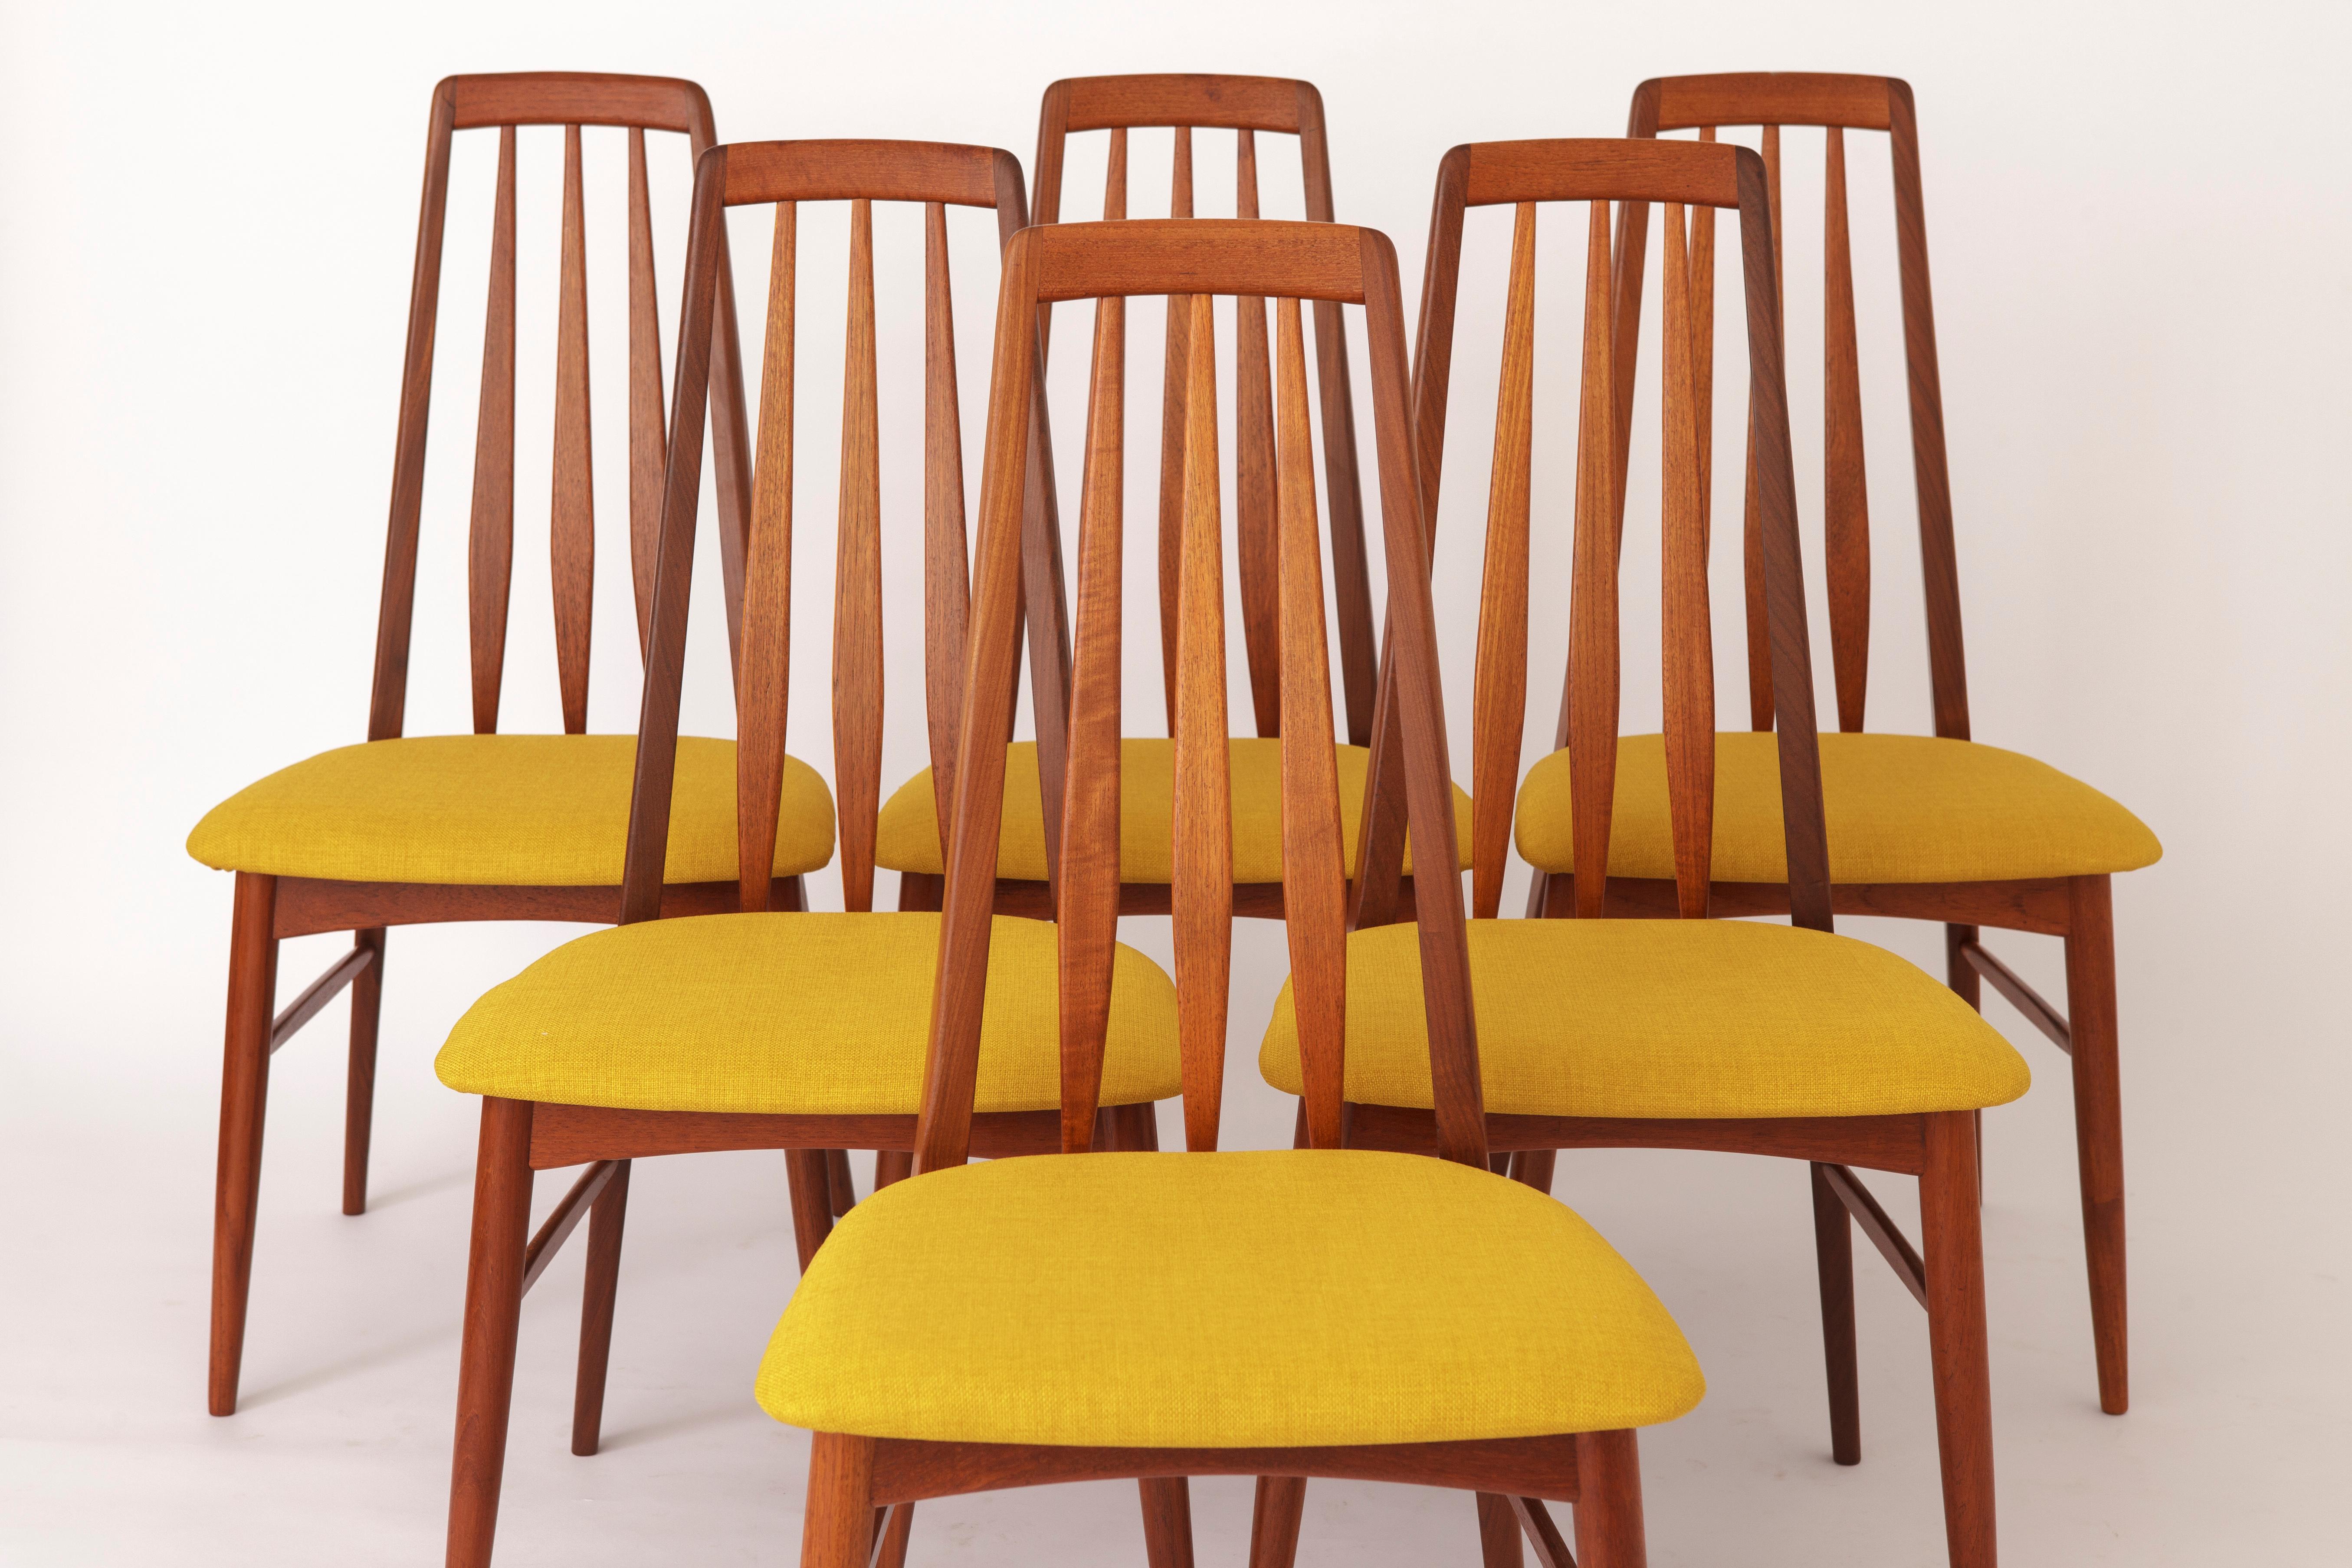 Set of 6 vintage dining chairs designed by Niels Koefoed, Denmark. 
Model 